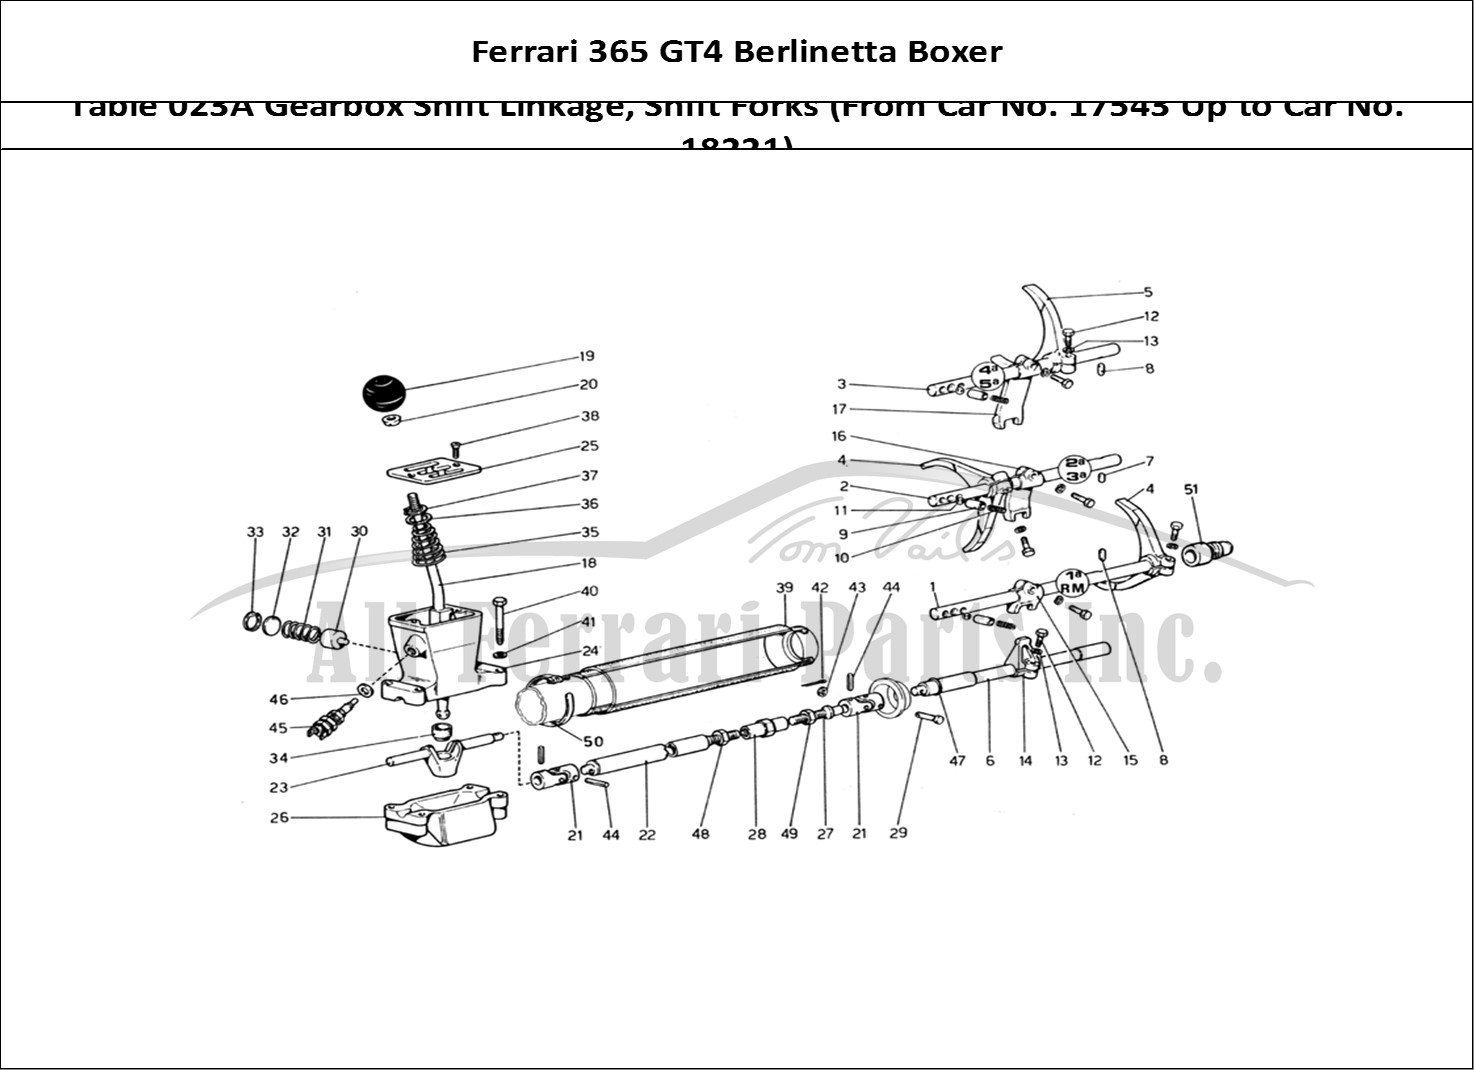 Ferrari Parts Ferrari 365 GT4 Berlinetta Boxer Page 023 Gearbox Controls (From Ca